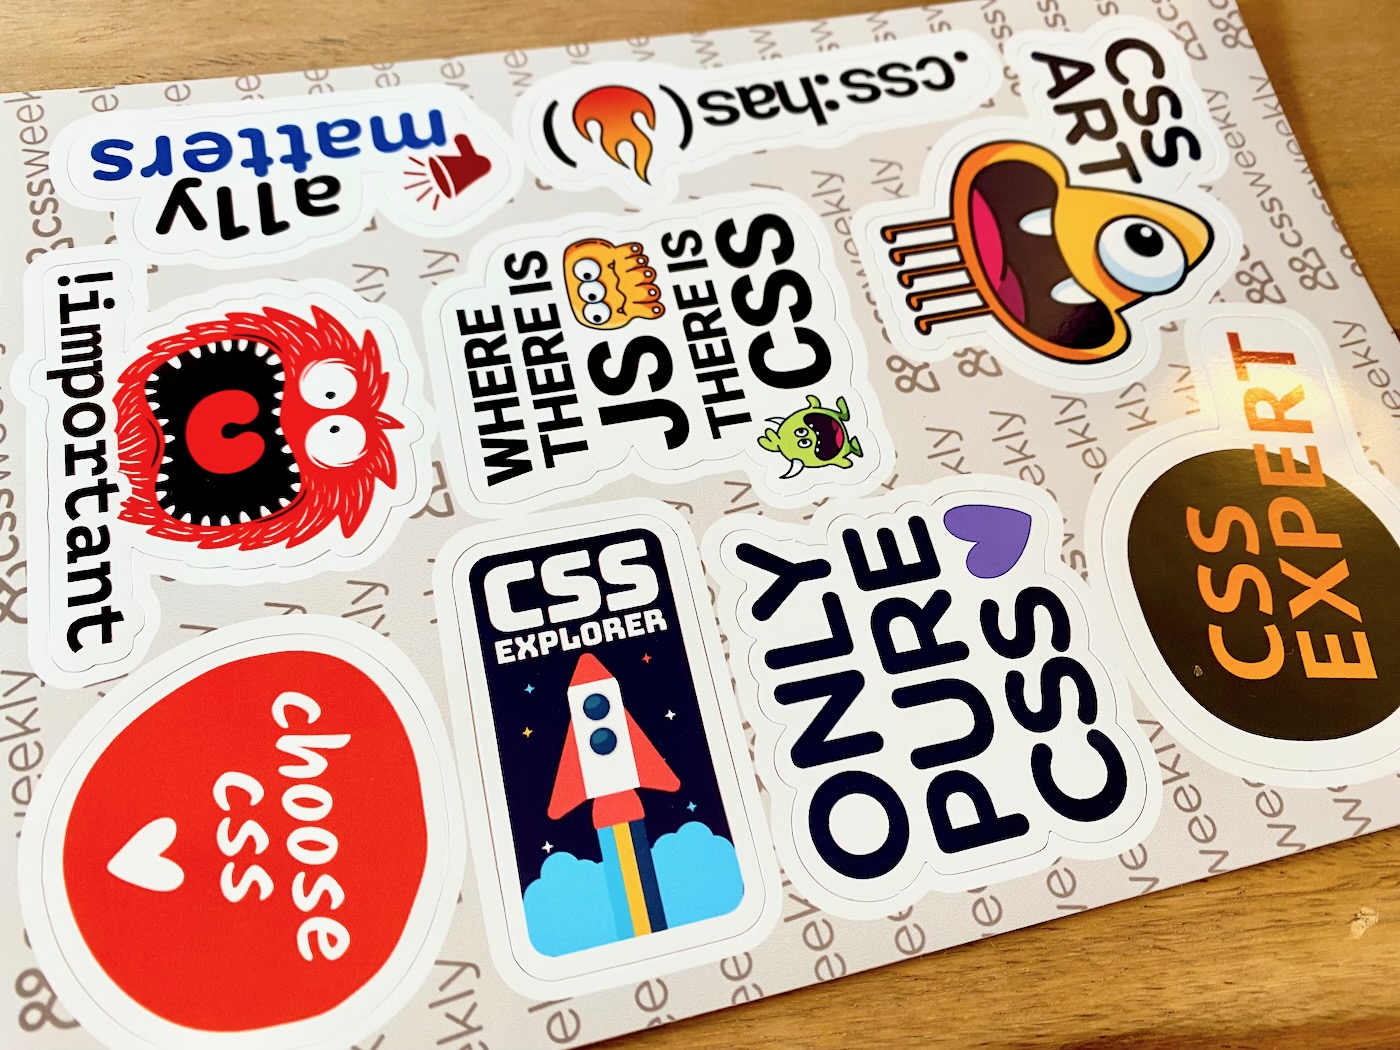 CSS Stickers Set #1 print sheet on a desk.